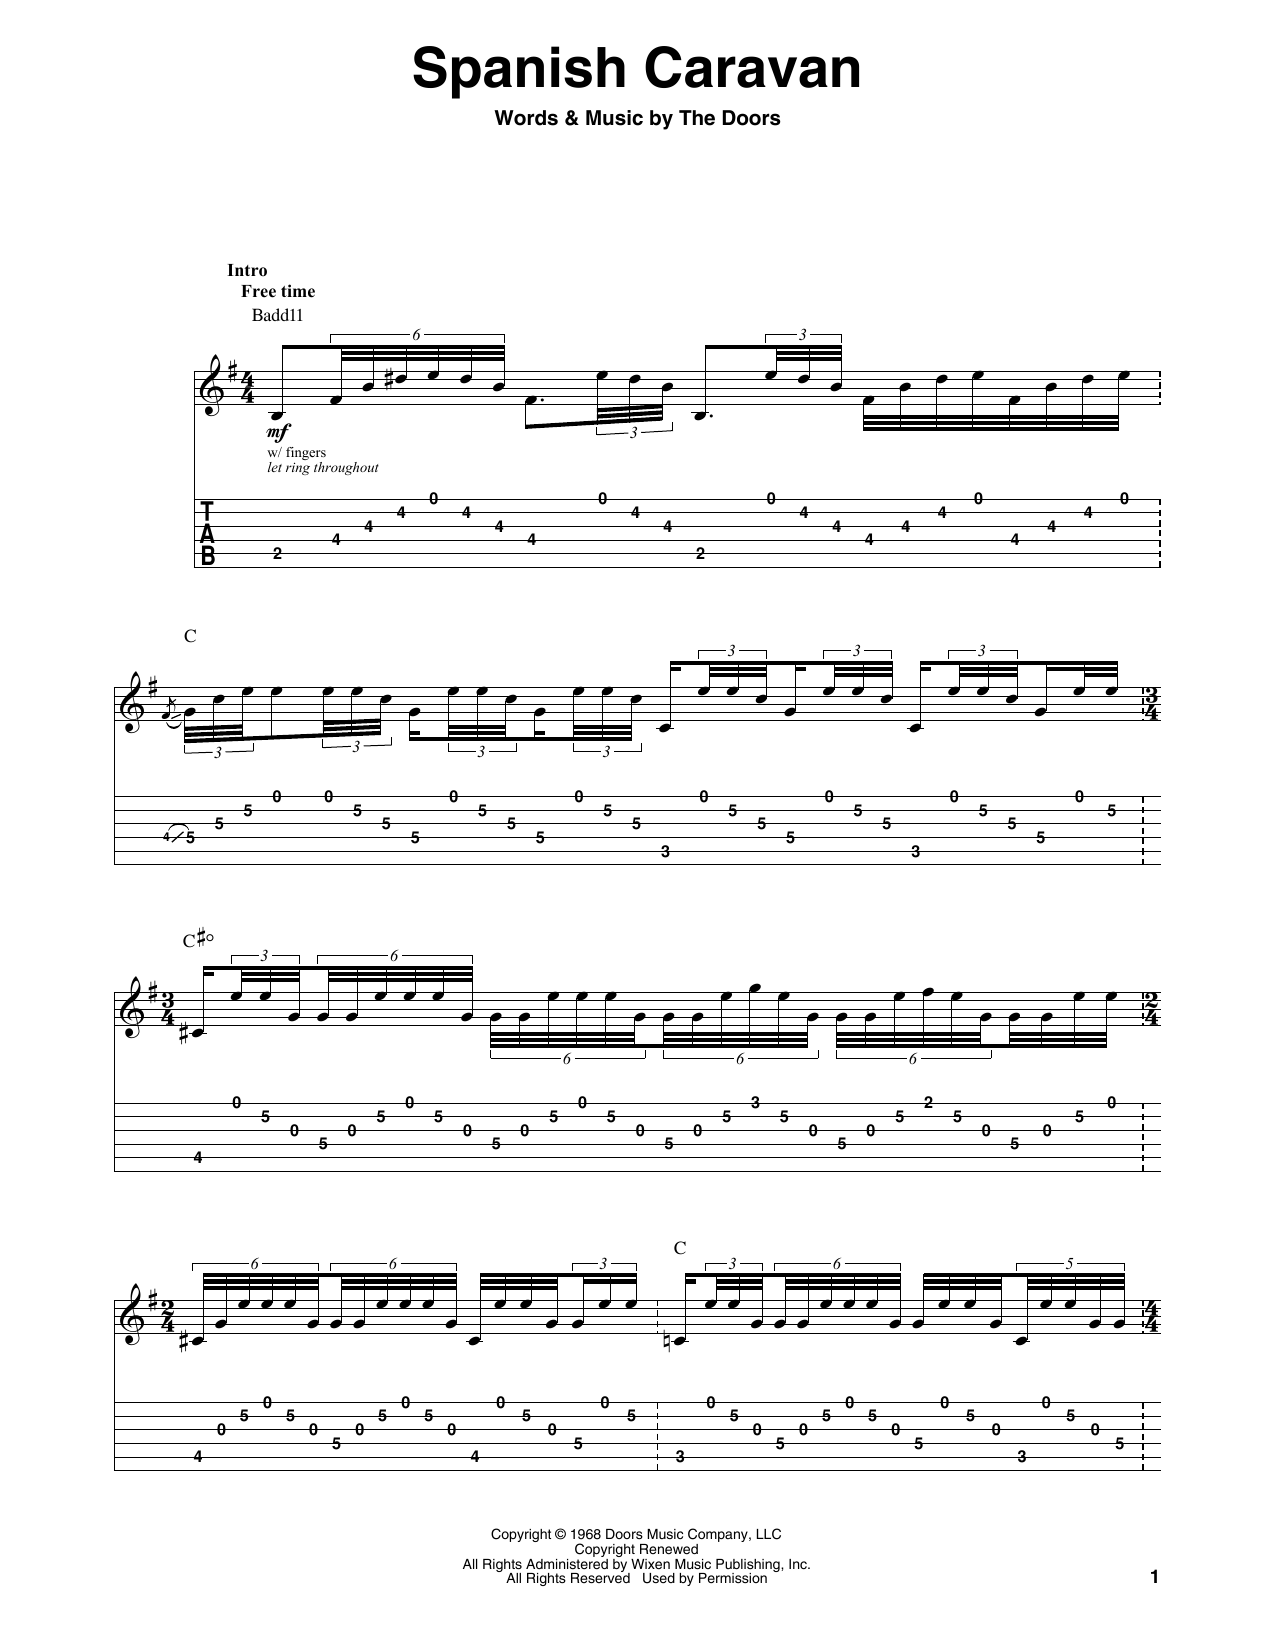 The Doors Spanish Caravan Sheet Music Notes & Chords for Guitar Tab (Single Guitar) - Download or Print PDF